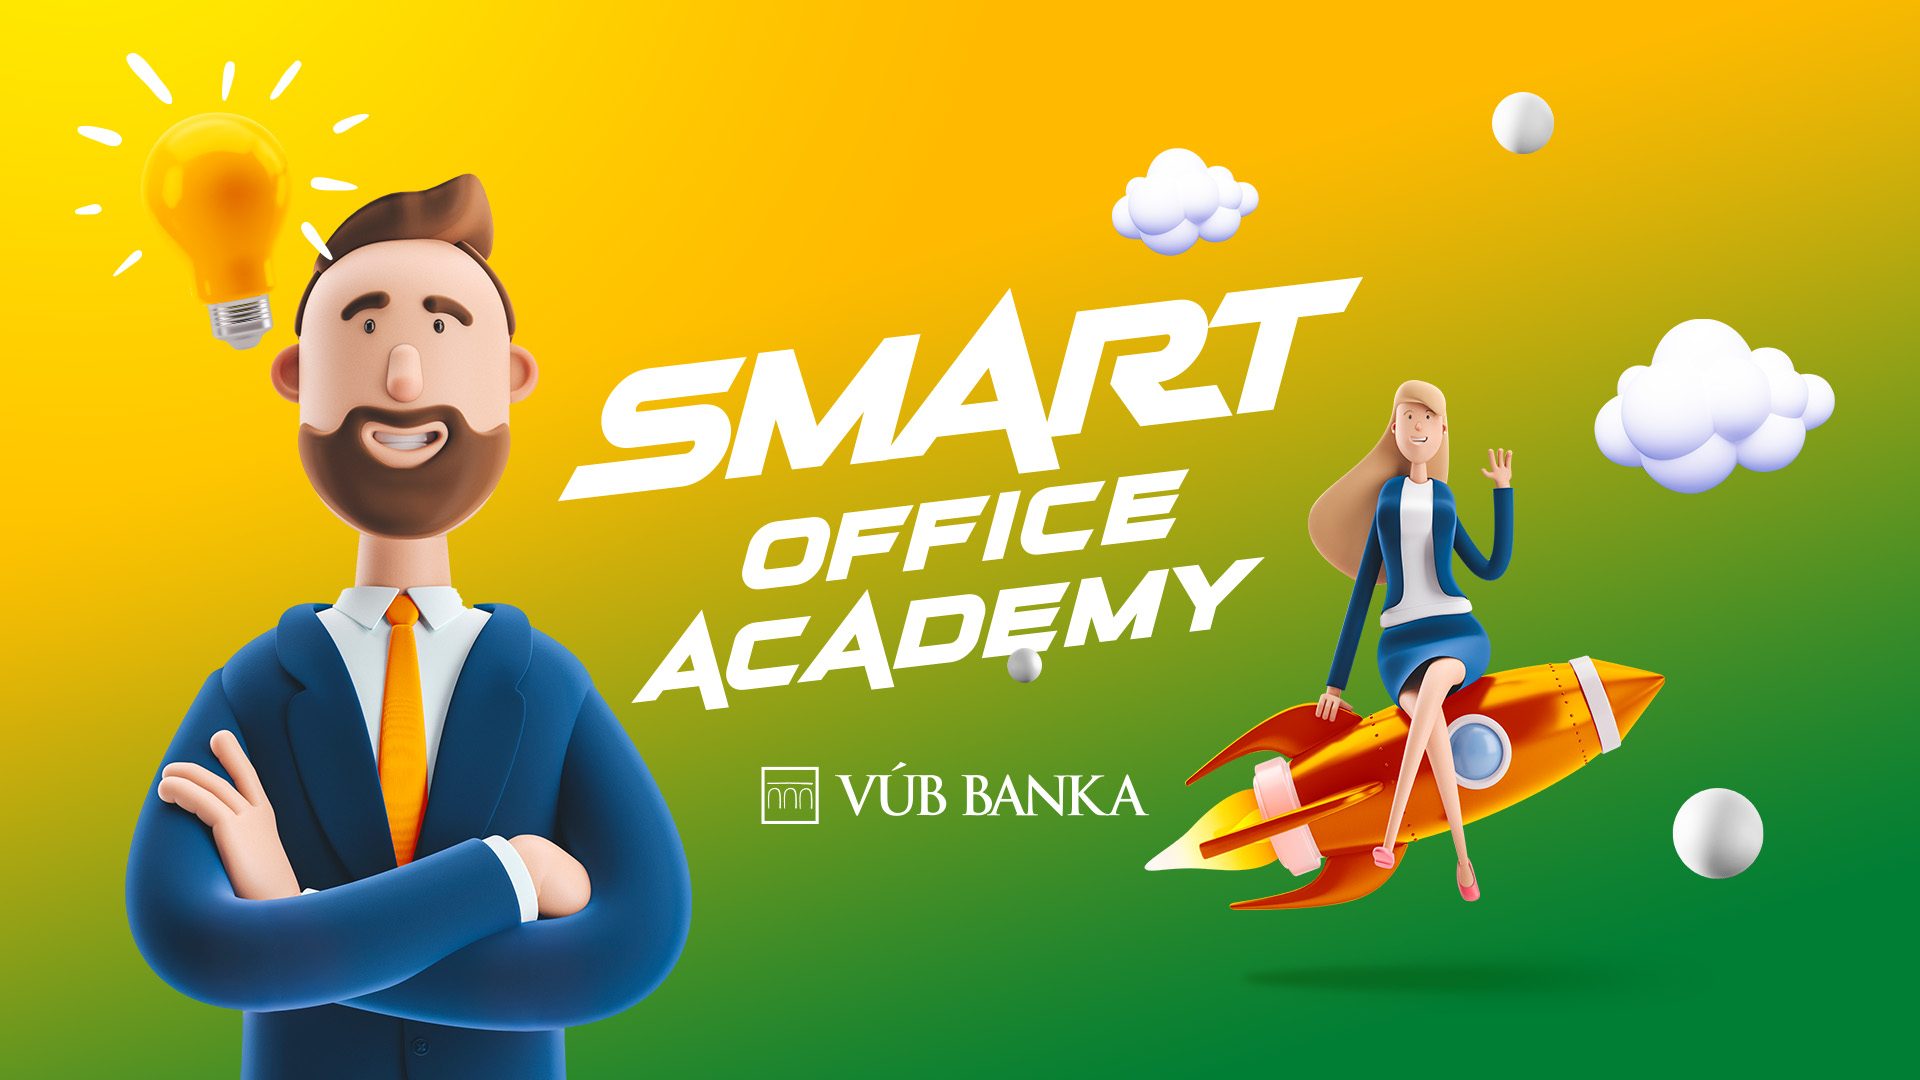 VÚB – Smart Office Academy